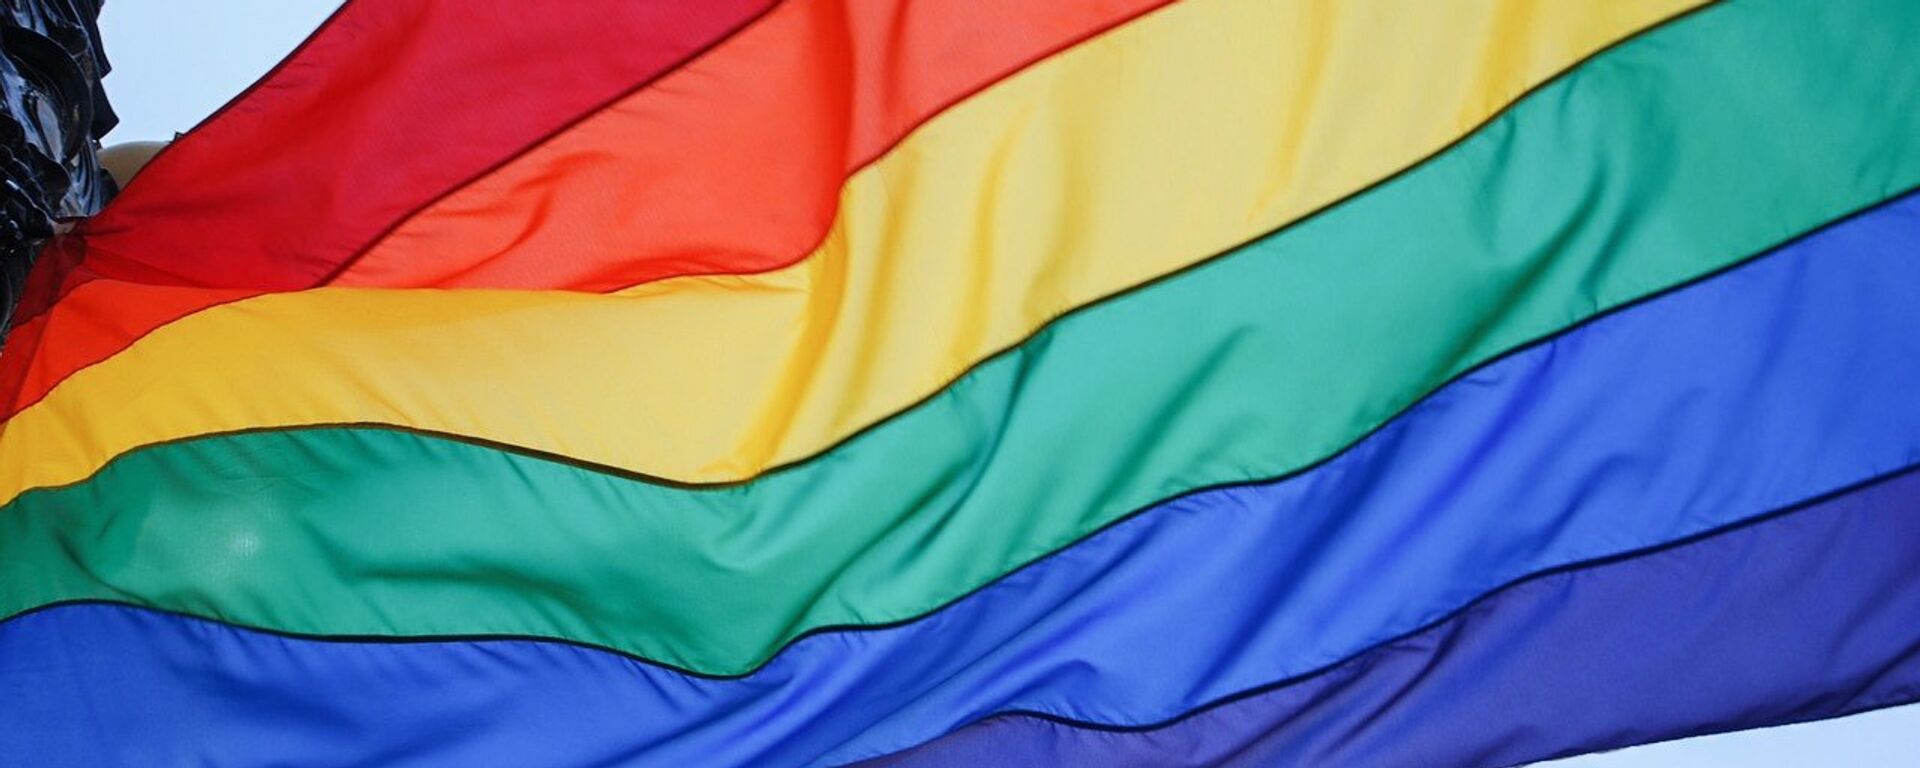 Bandera arcoíris, símbolo del movimiento LGBT - Sputnik Mundo, 1920, 22.04.2017